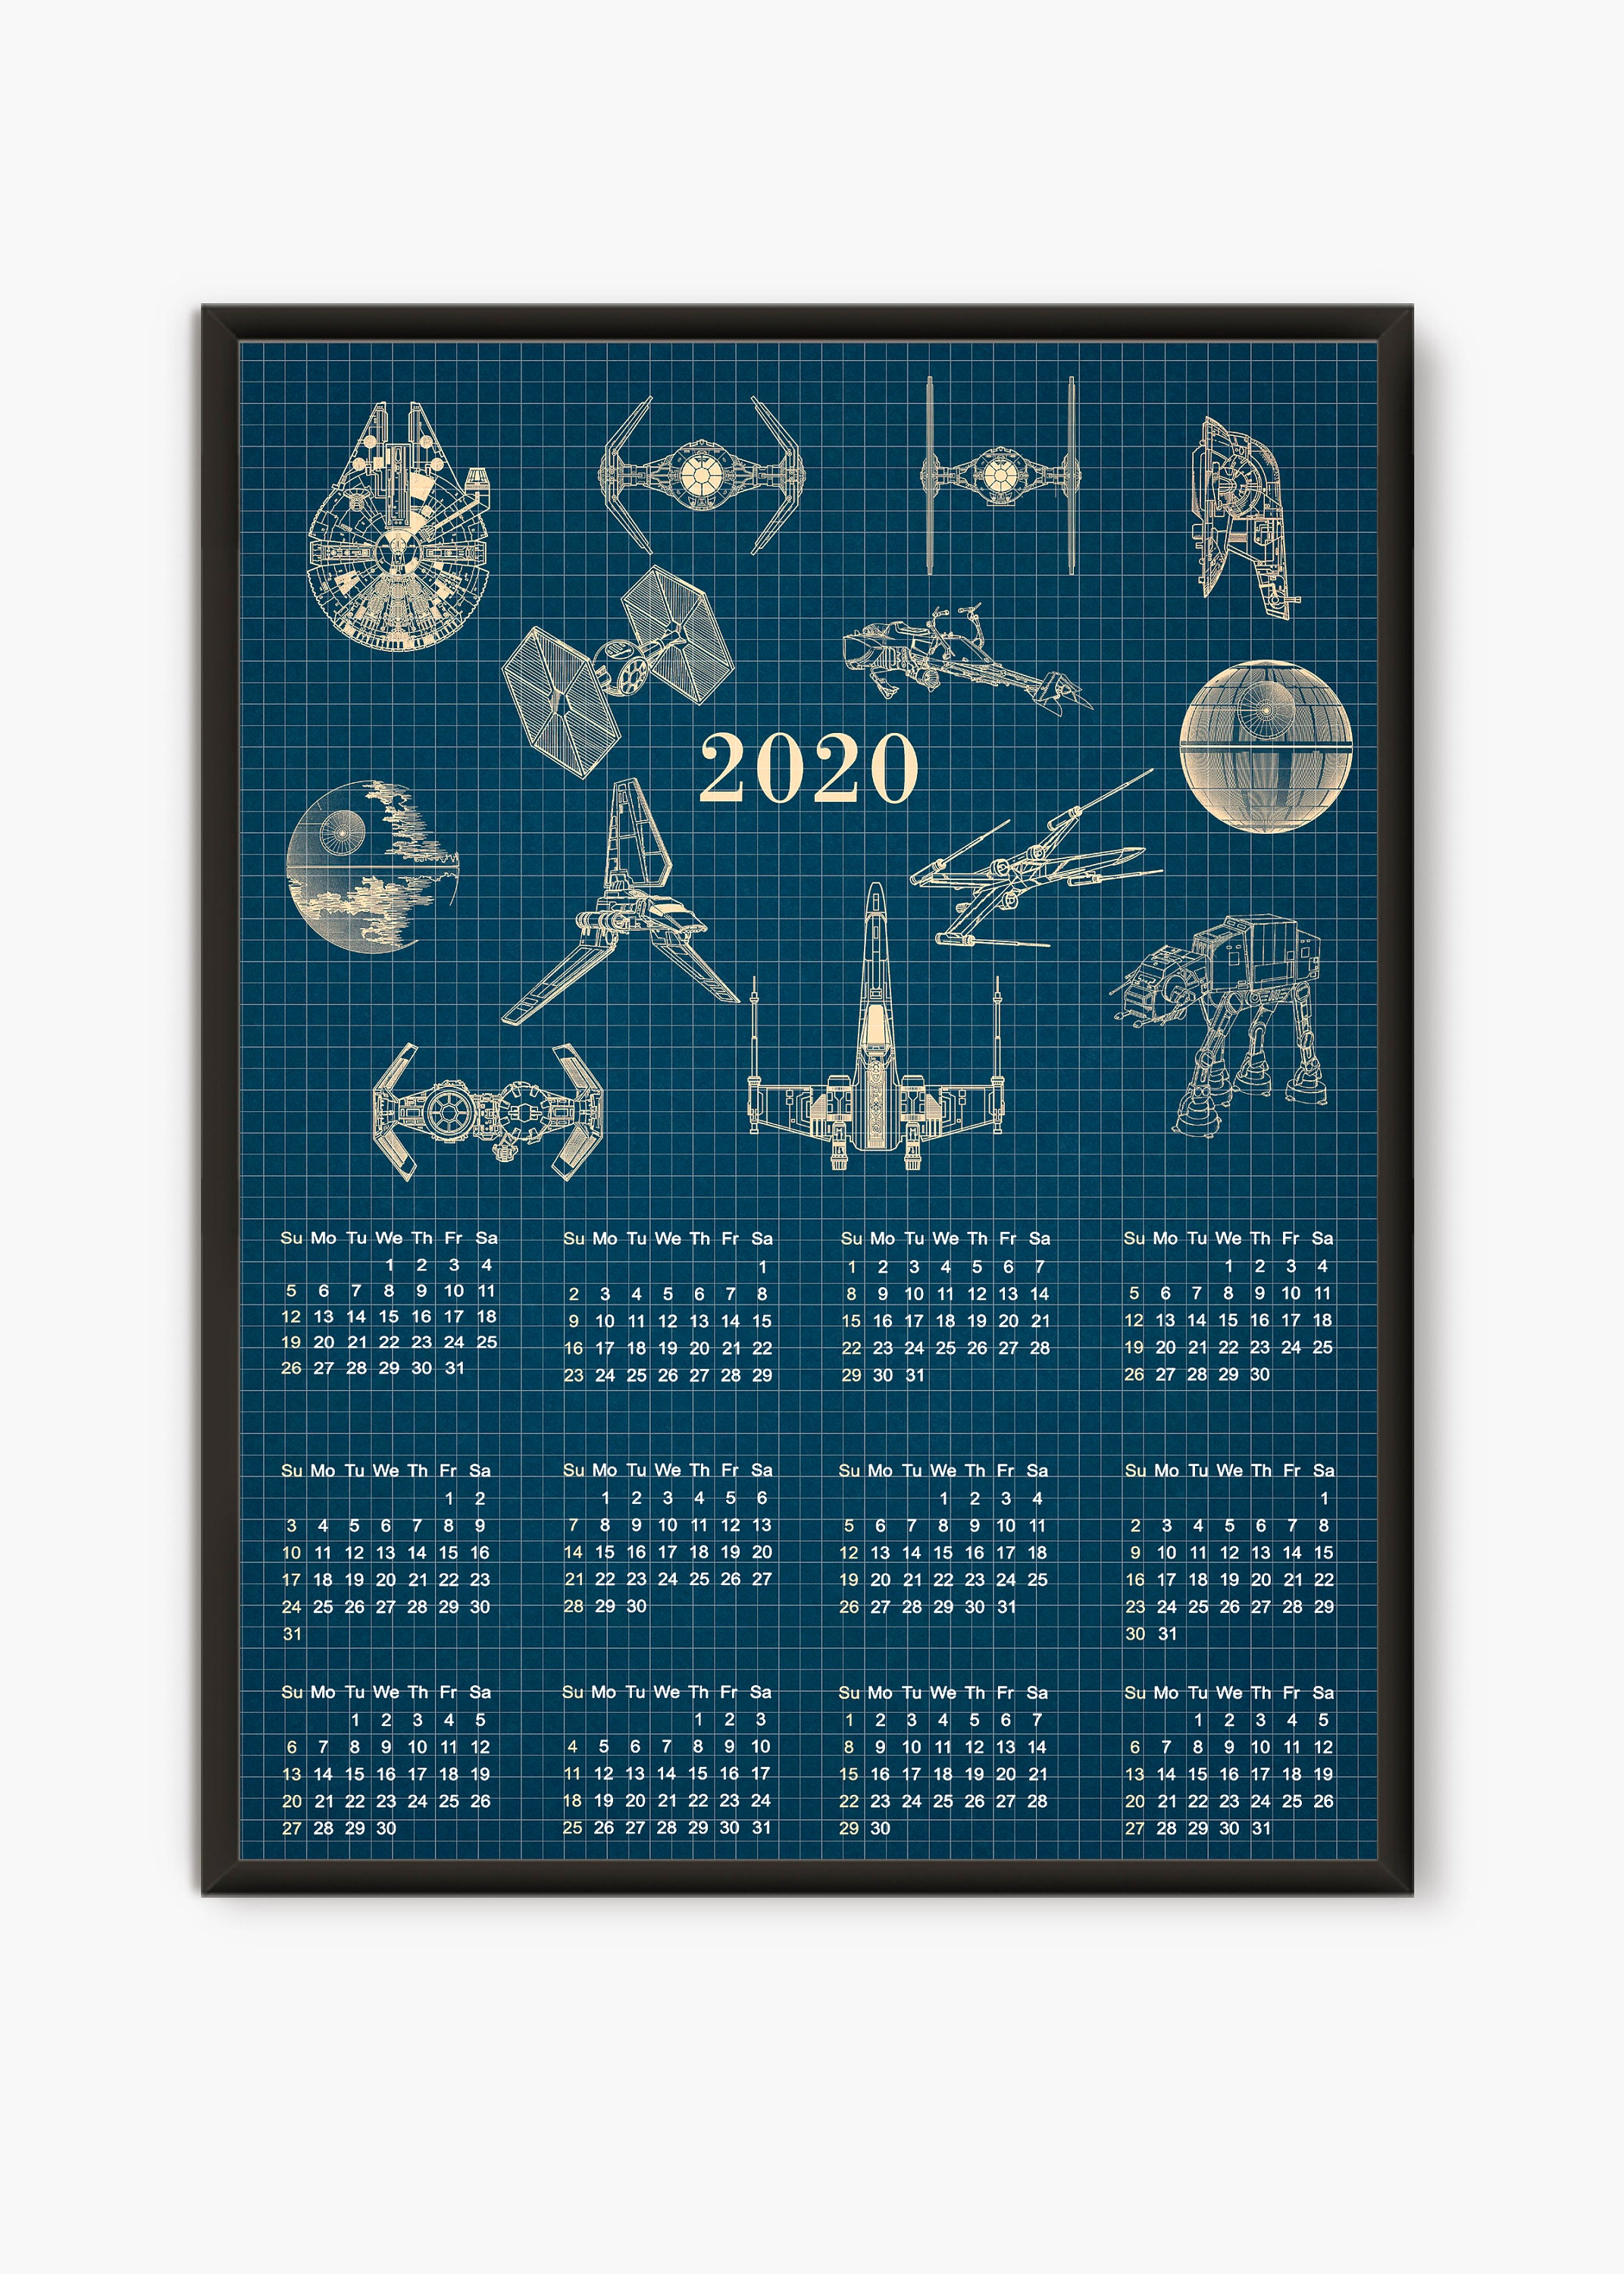 Star Wars poster 2020 wall Calendar, Star Wars lover Gift large calendar, kids room decor patent prints